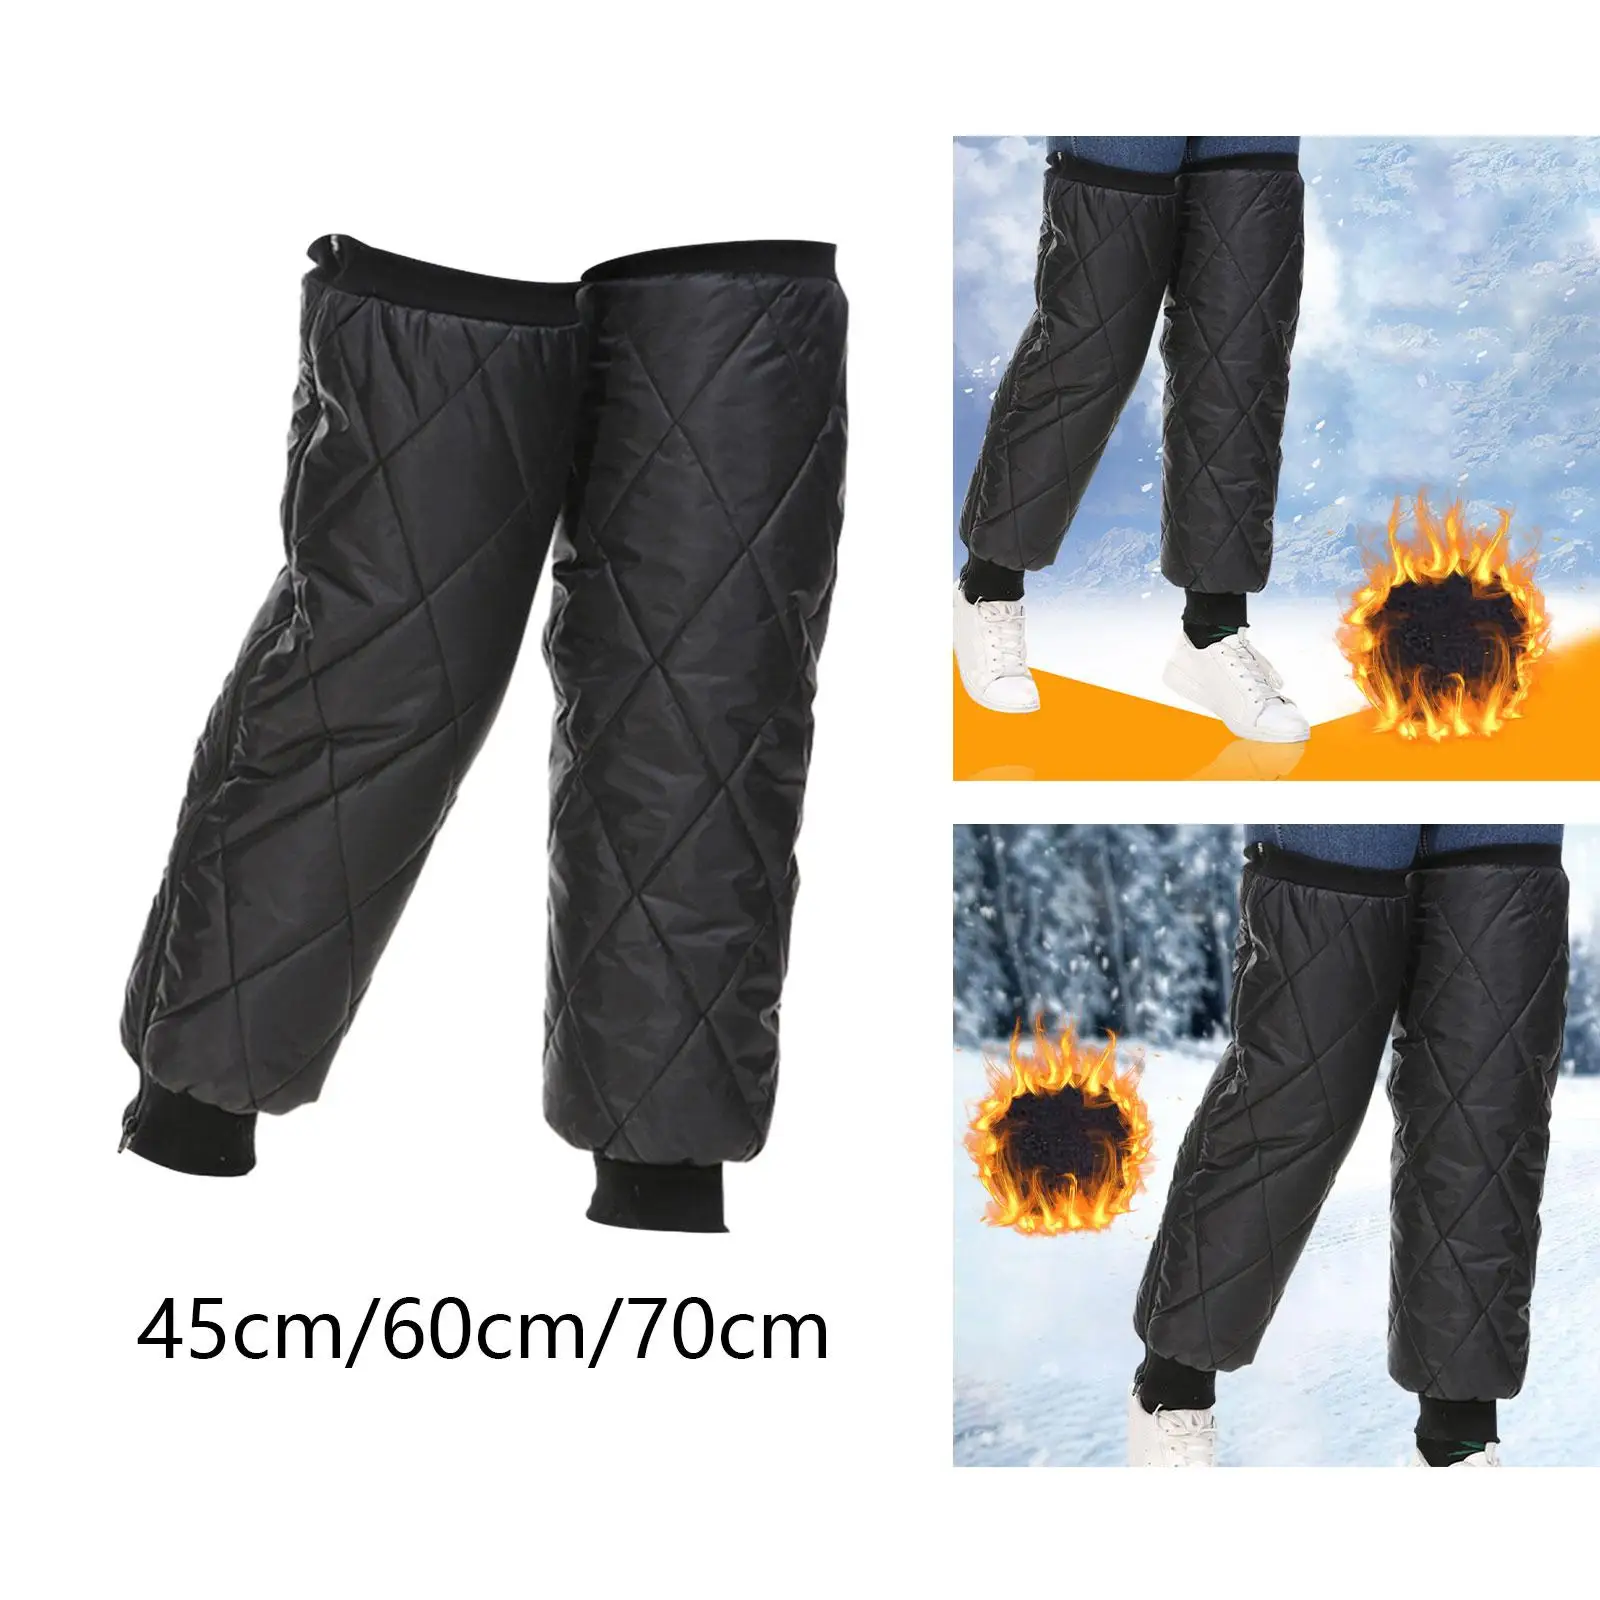 1 Pair Leg Warmers Thermal Protective Gear Windproof Leg Gaiter for Men Women Winter Working Mountain Biking Outdoor Activities